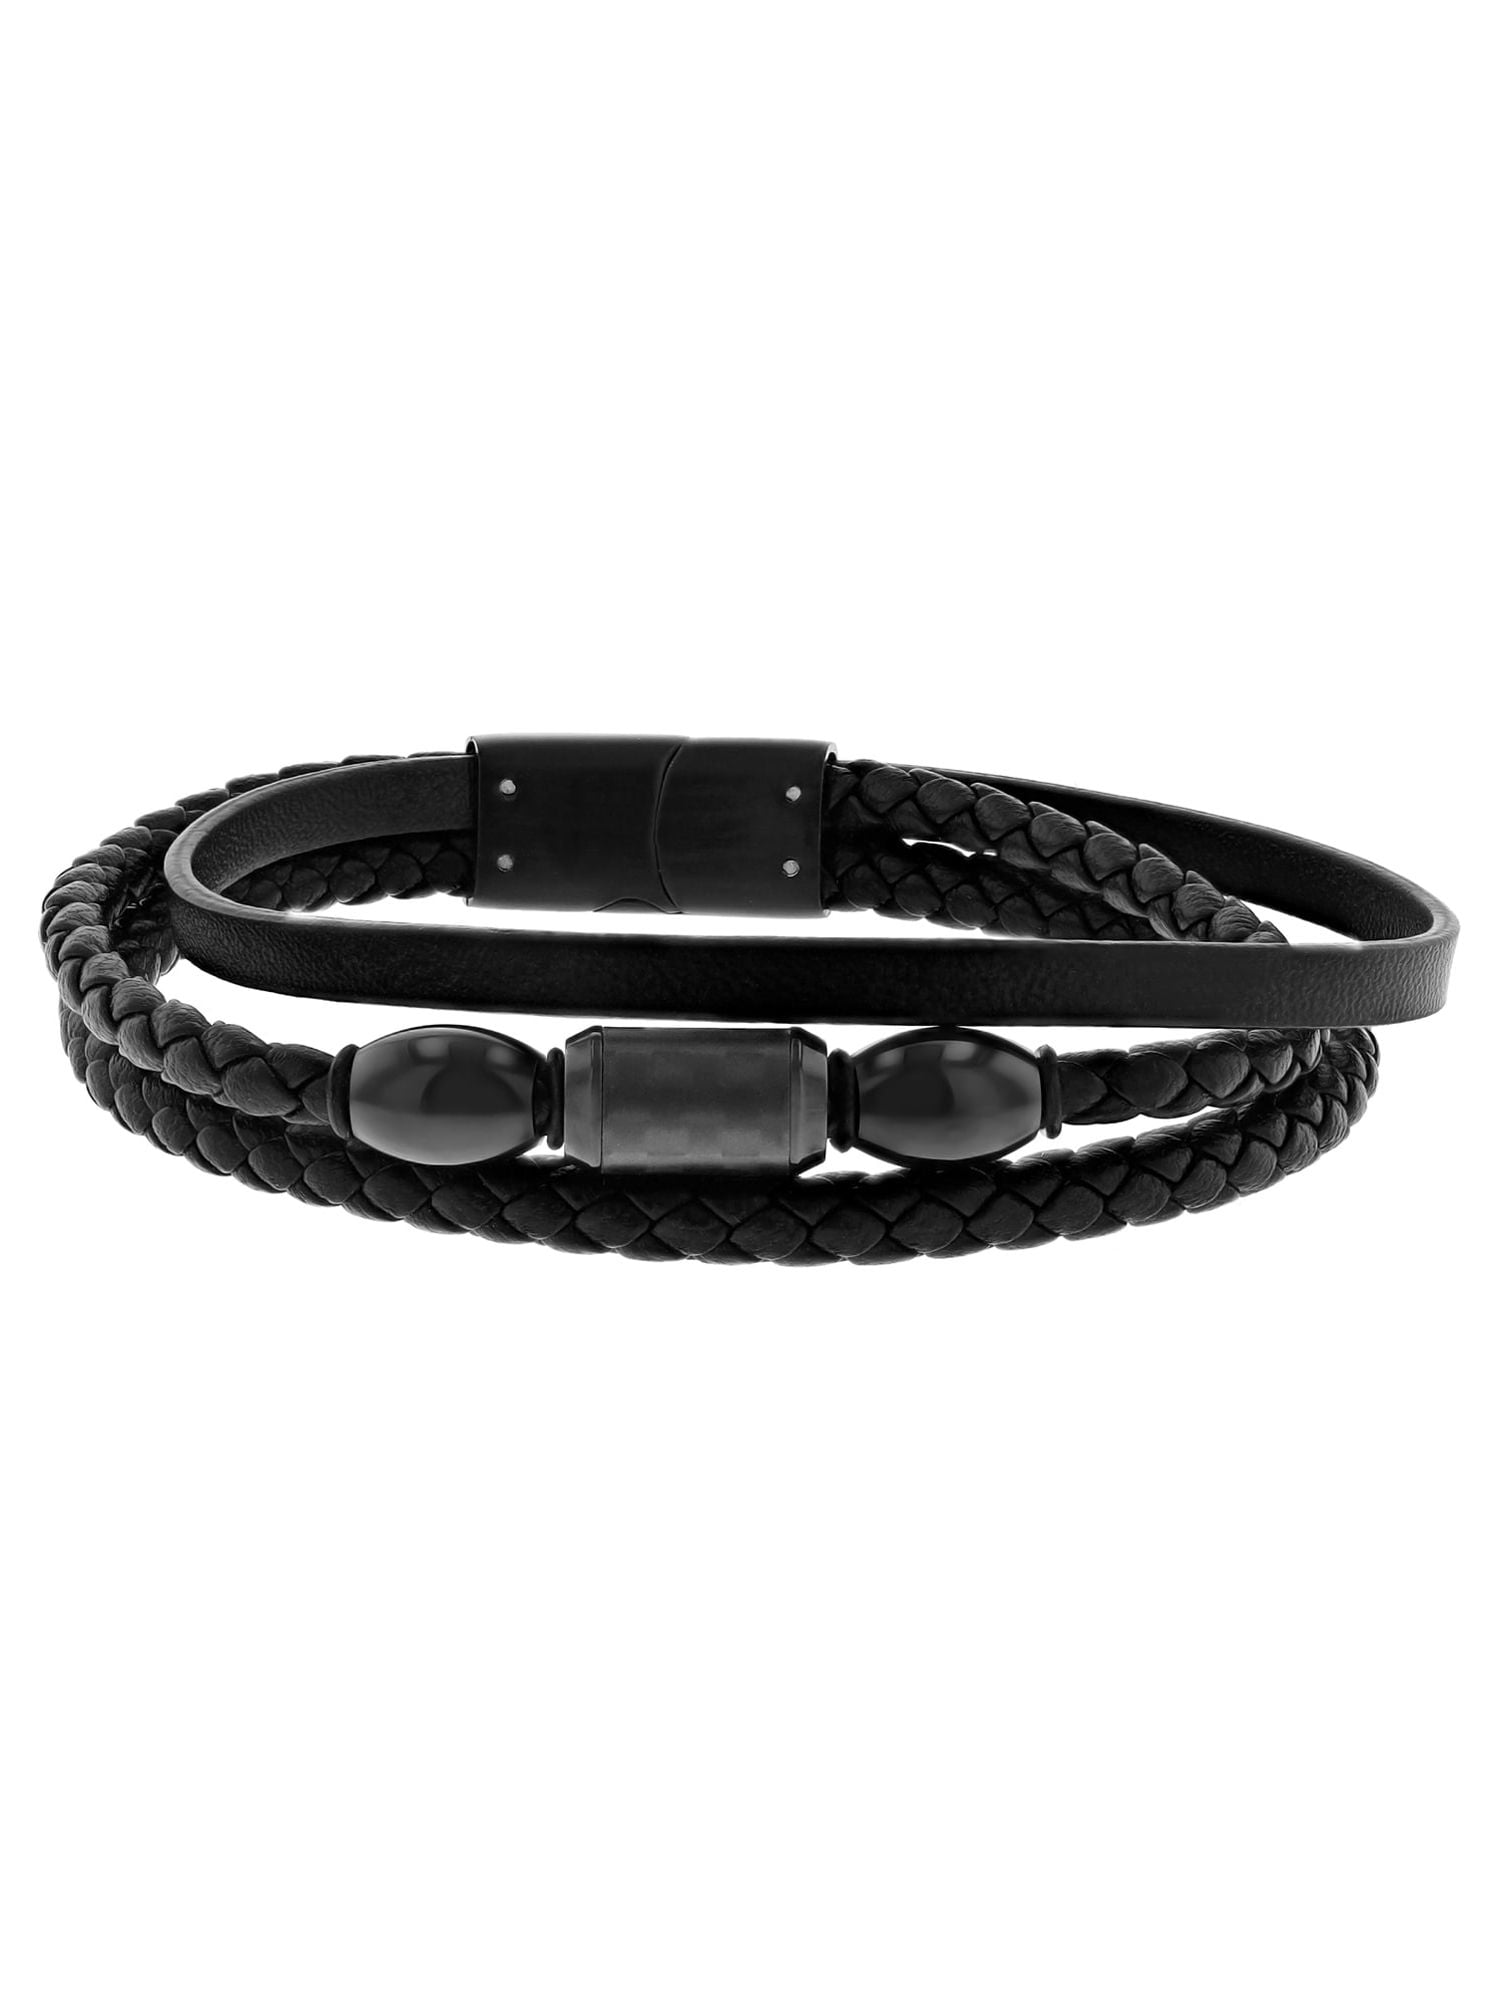 Men's or Women's Black Leather Bracelet, adjustable – Create Hope Cuffs